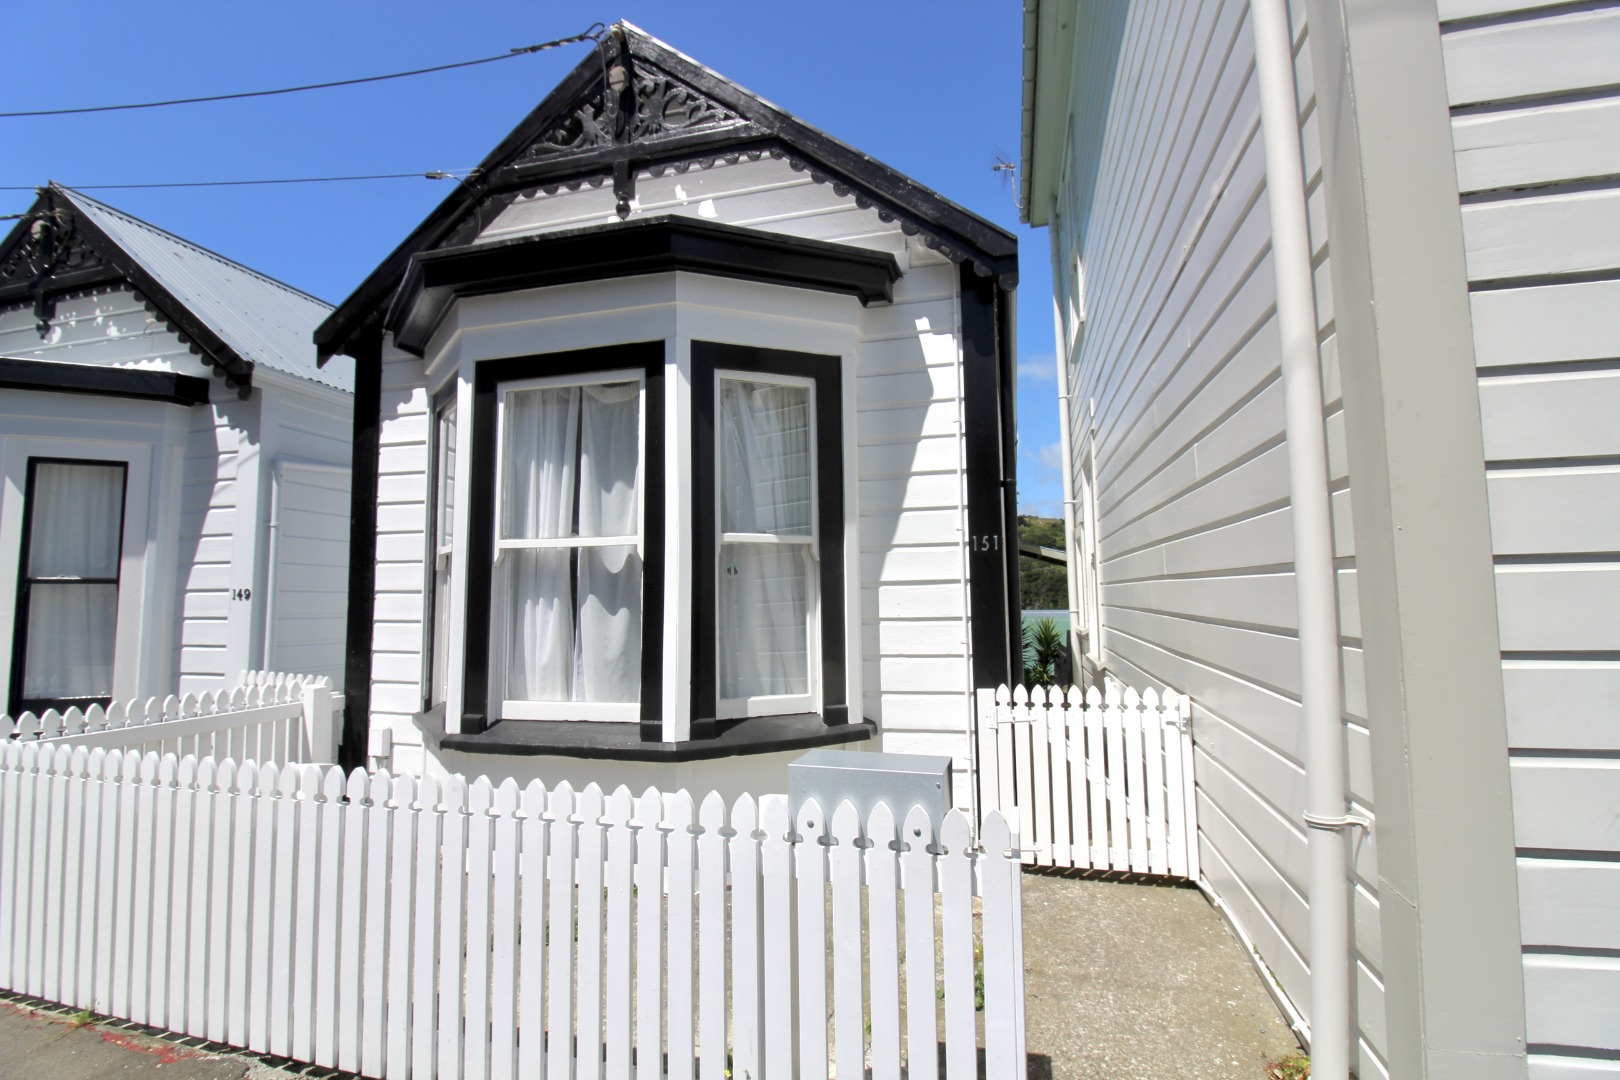 Real Estate For Rent Houses & Apartments : 2 Bedroom on Tasman Street, Wellington